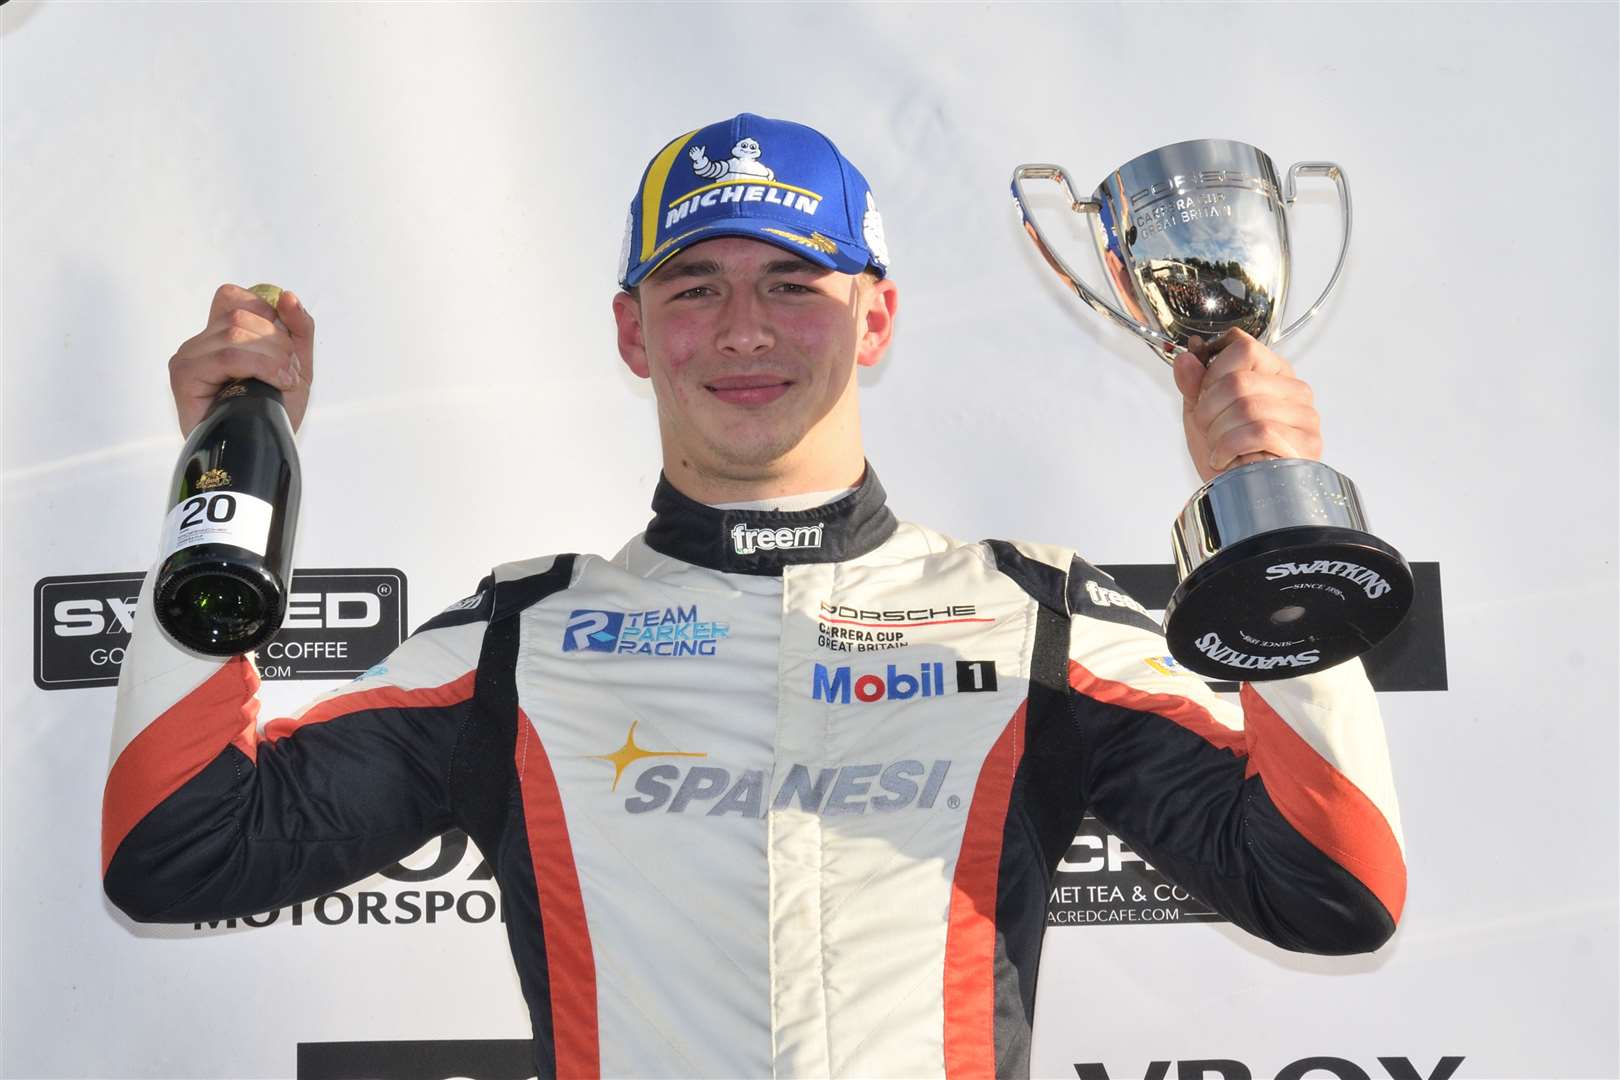 Maidstone's Kiern Jewiss scored six wins in Porsche Carrera Cup GB in 2022